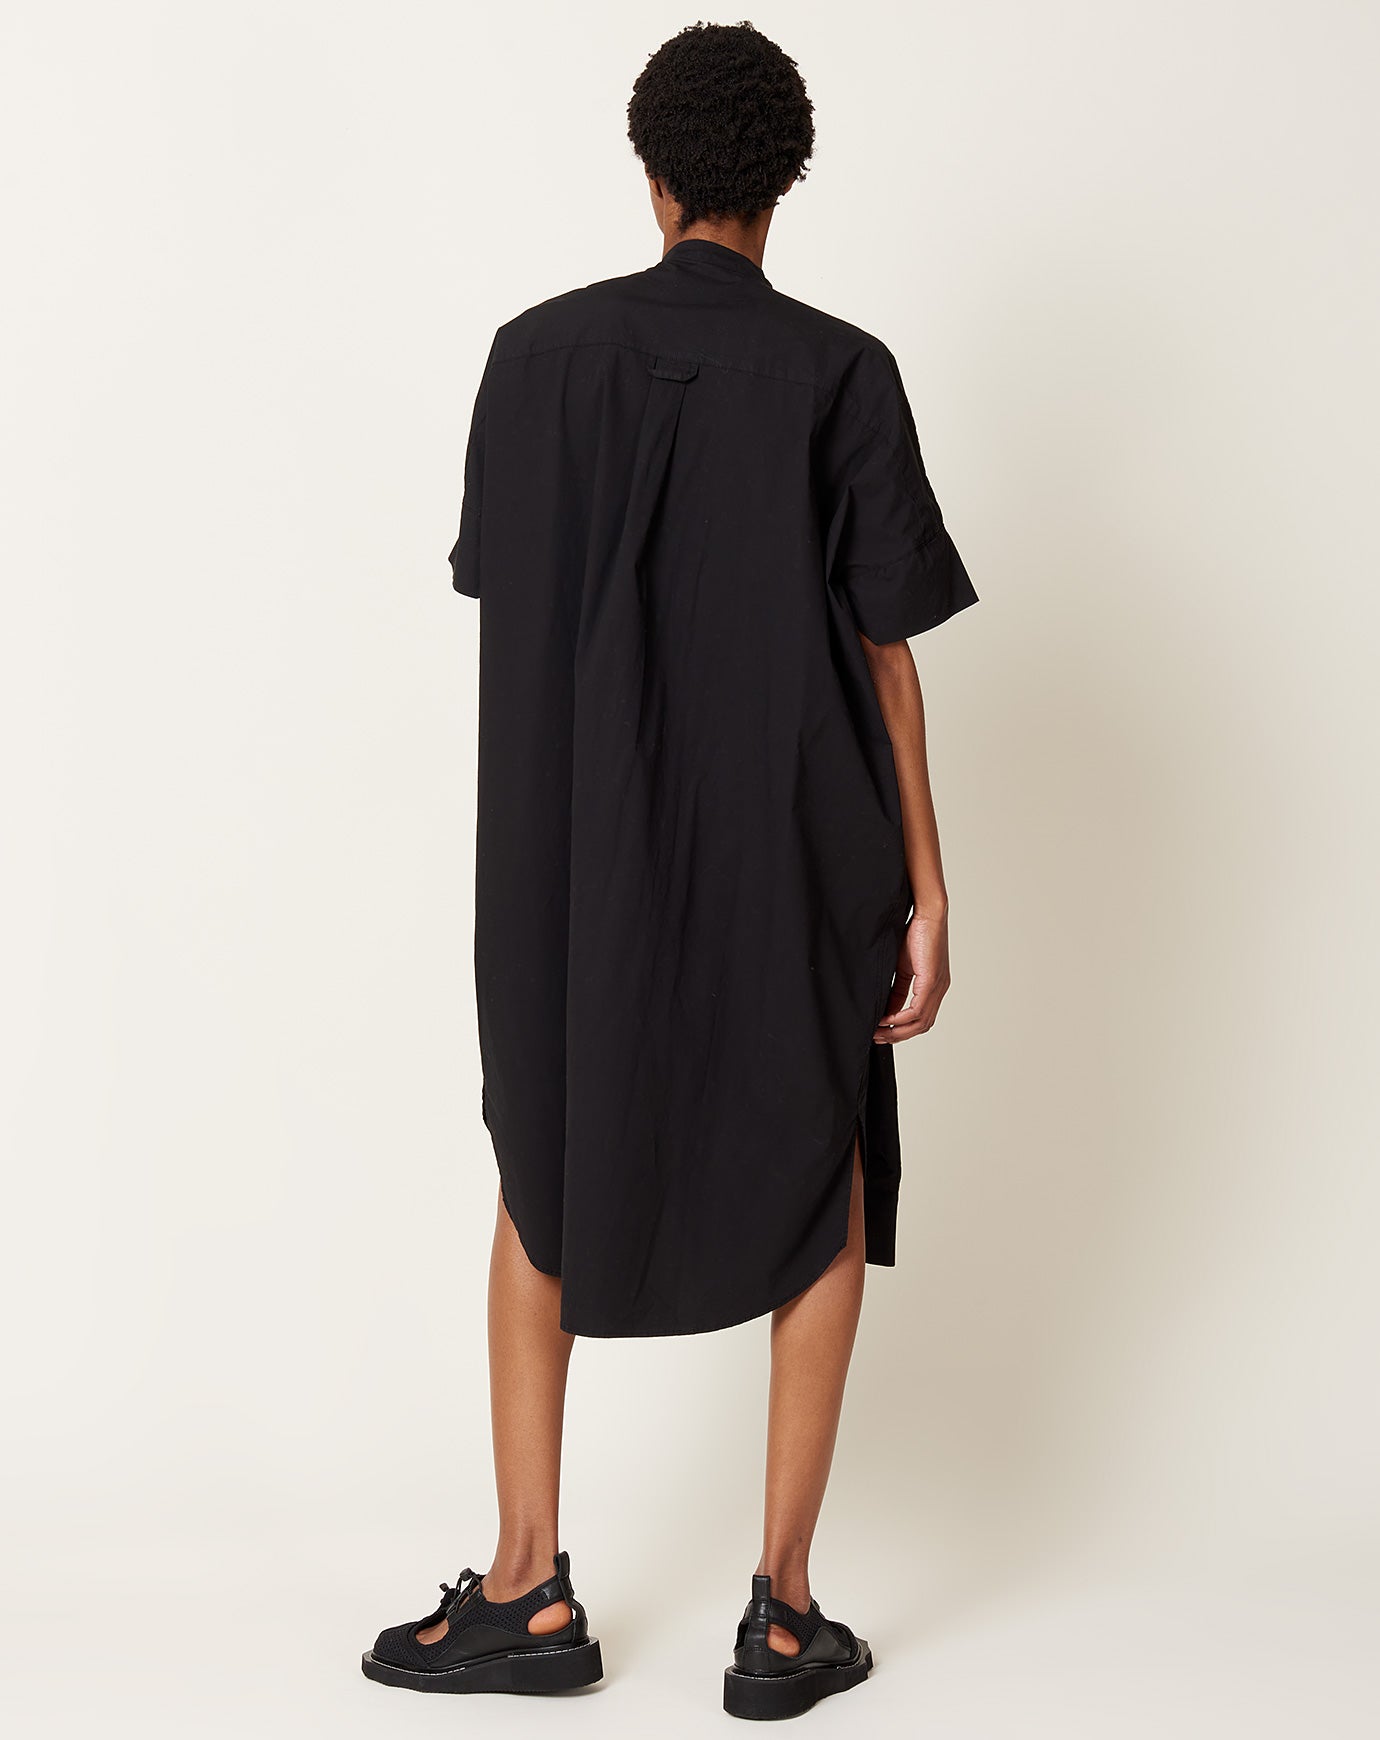 Henrik Vibskov Fold Shirt Dress in Black